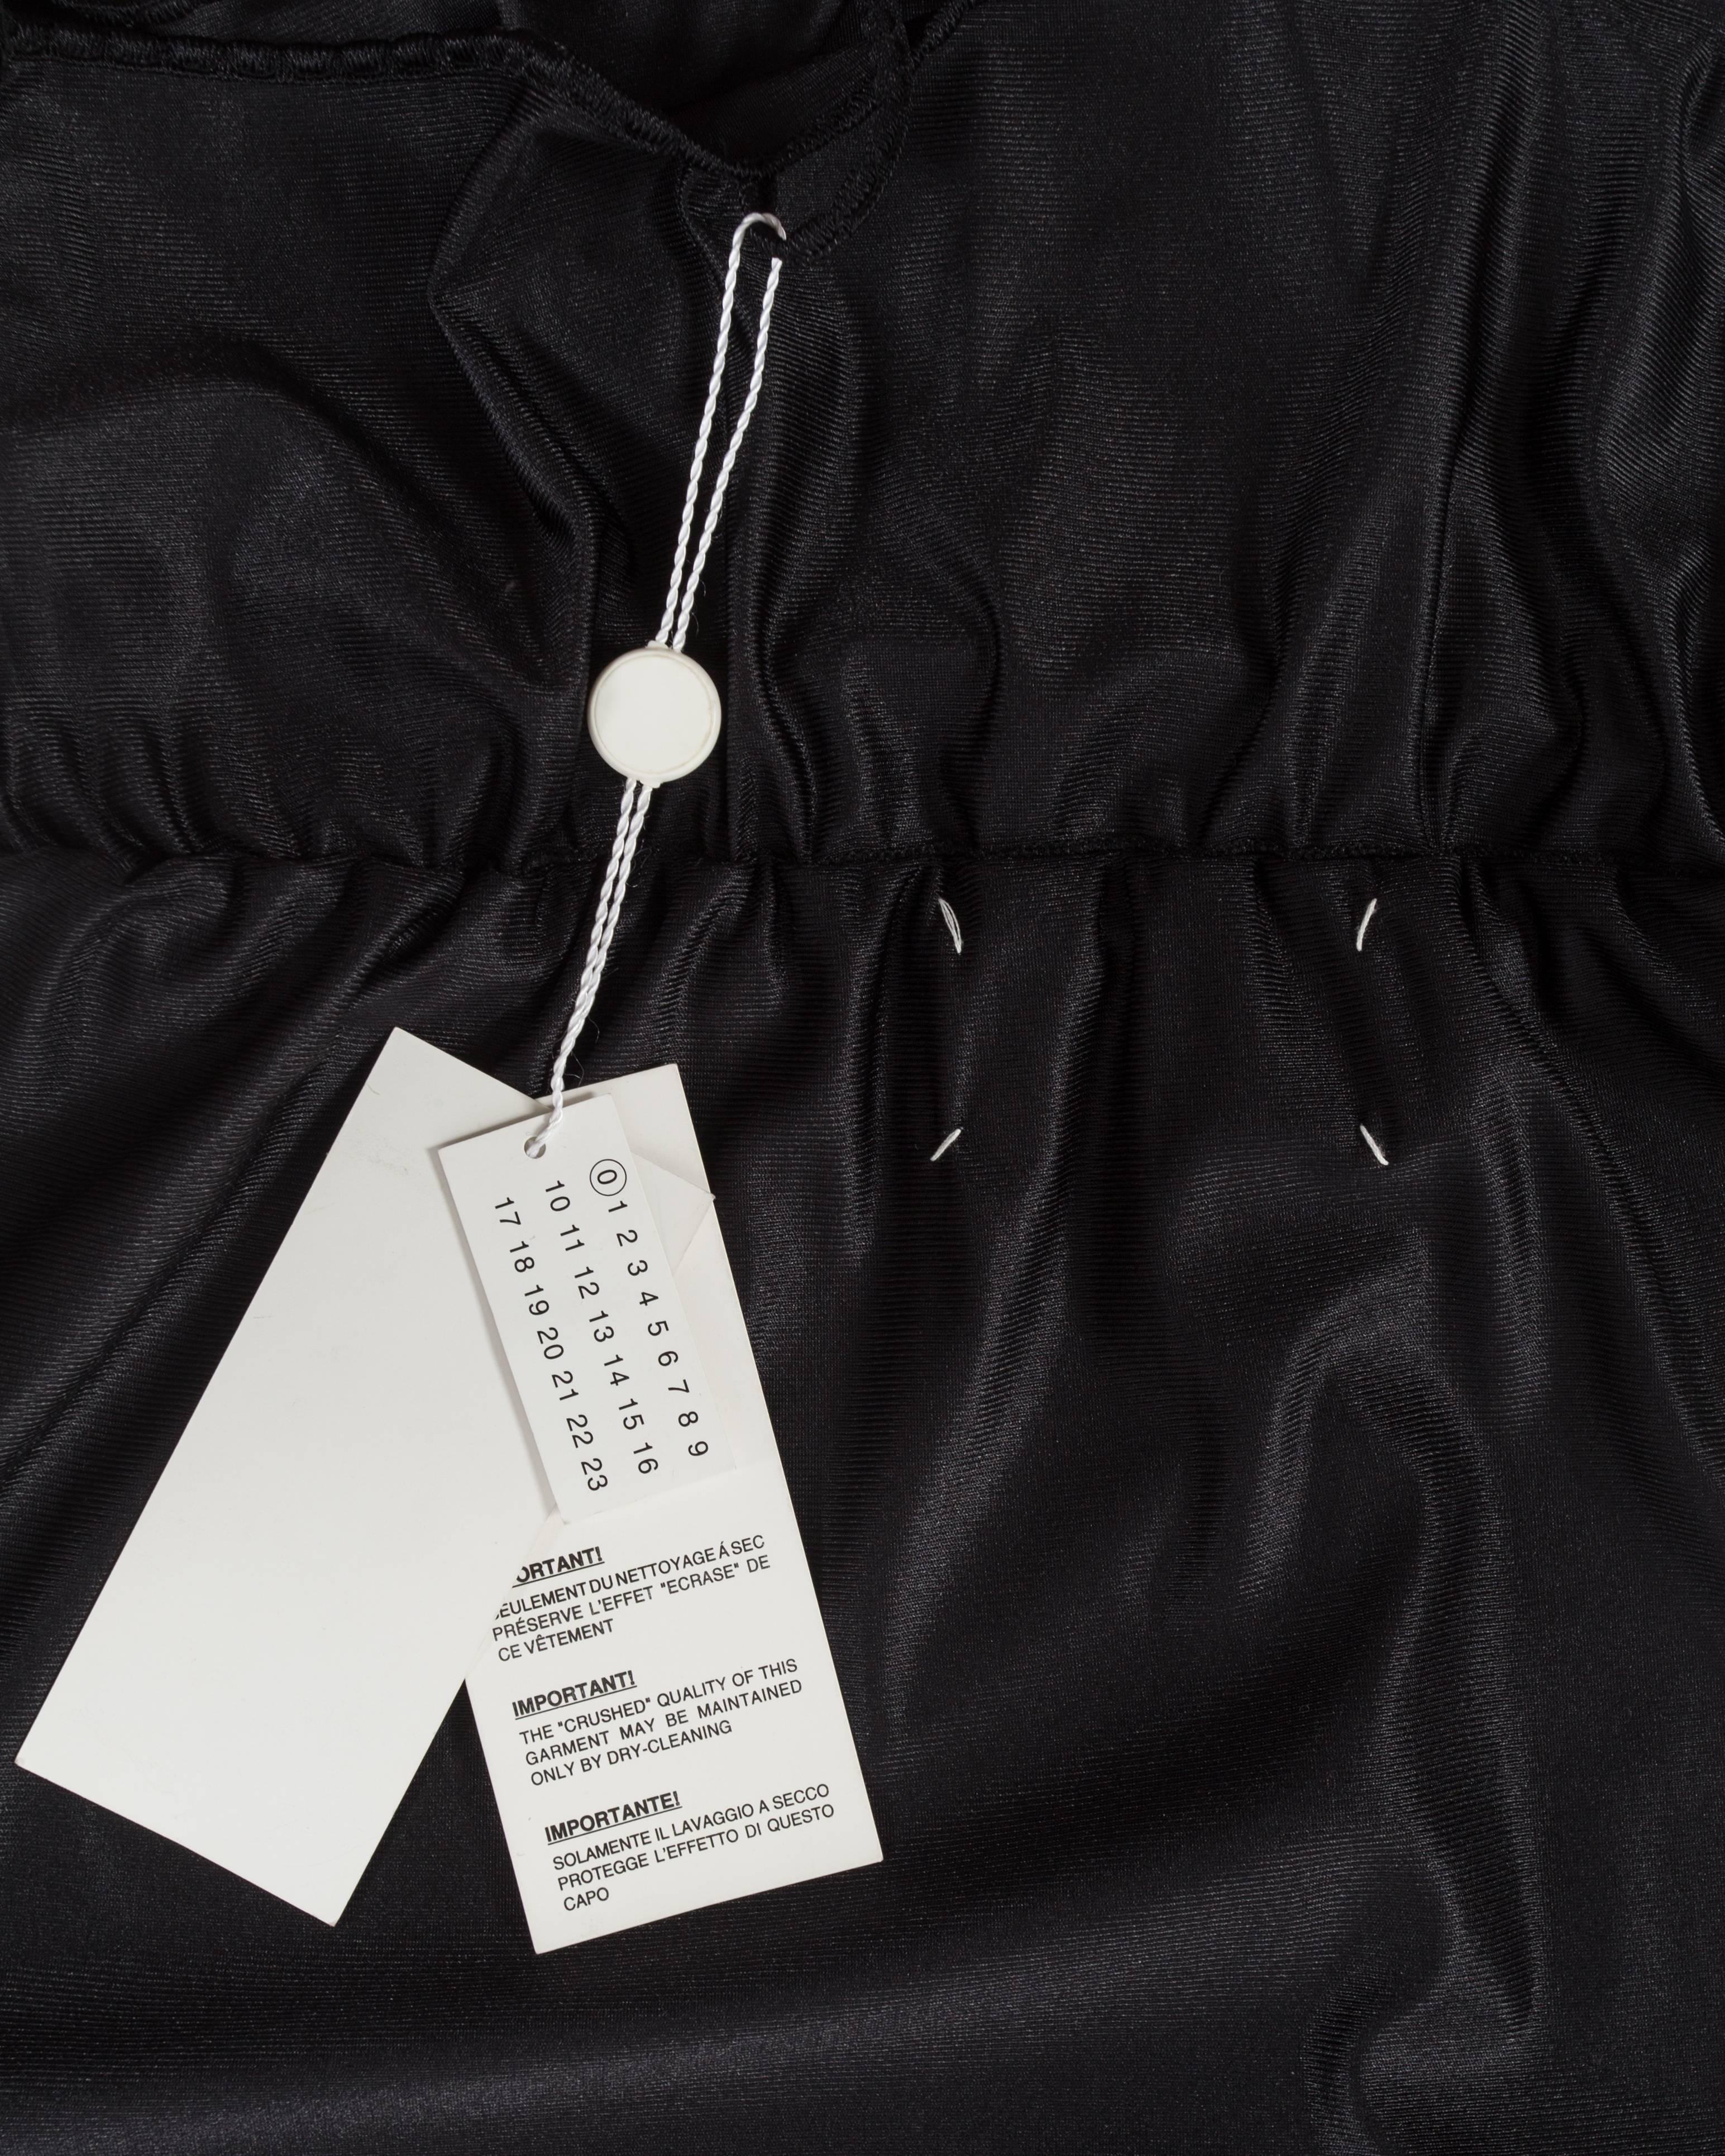 Women's Martin Margiela black artisanal slip dress reconstructed into a skirt, ss 2003